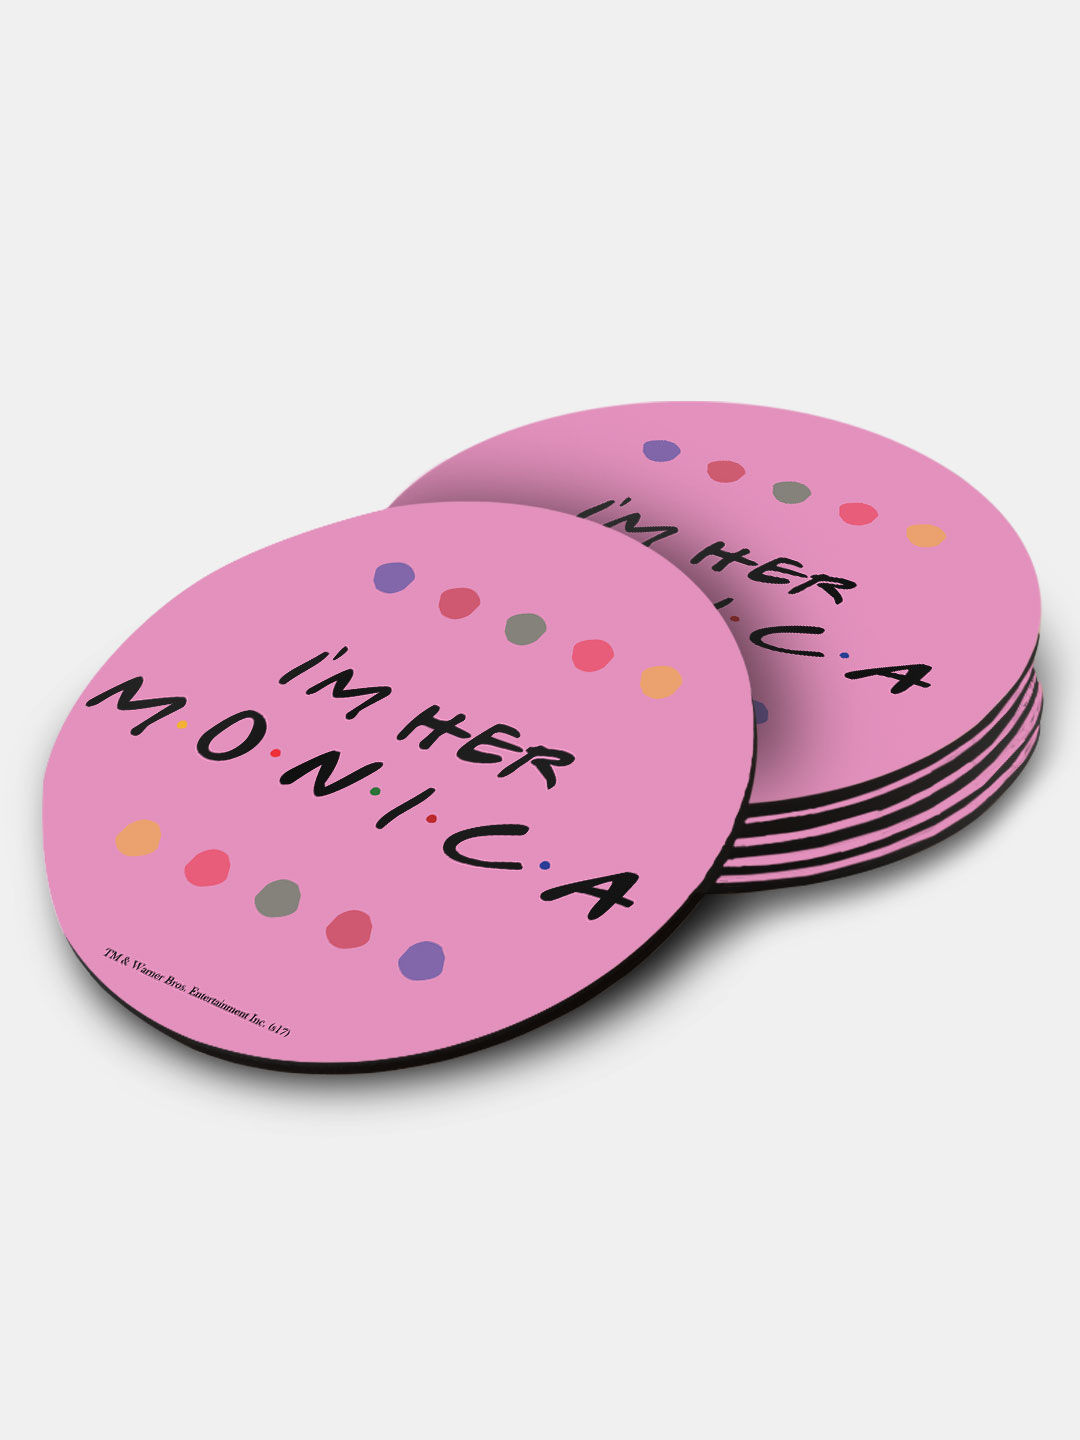 Buy Valentine Monica - Circular Coasters Coasters Online